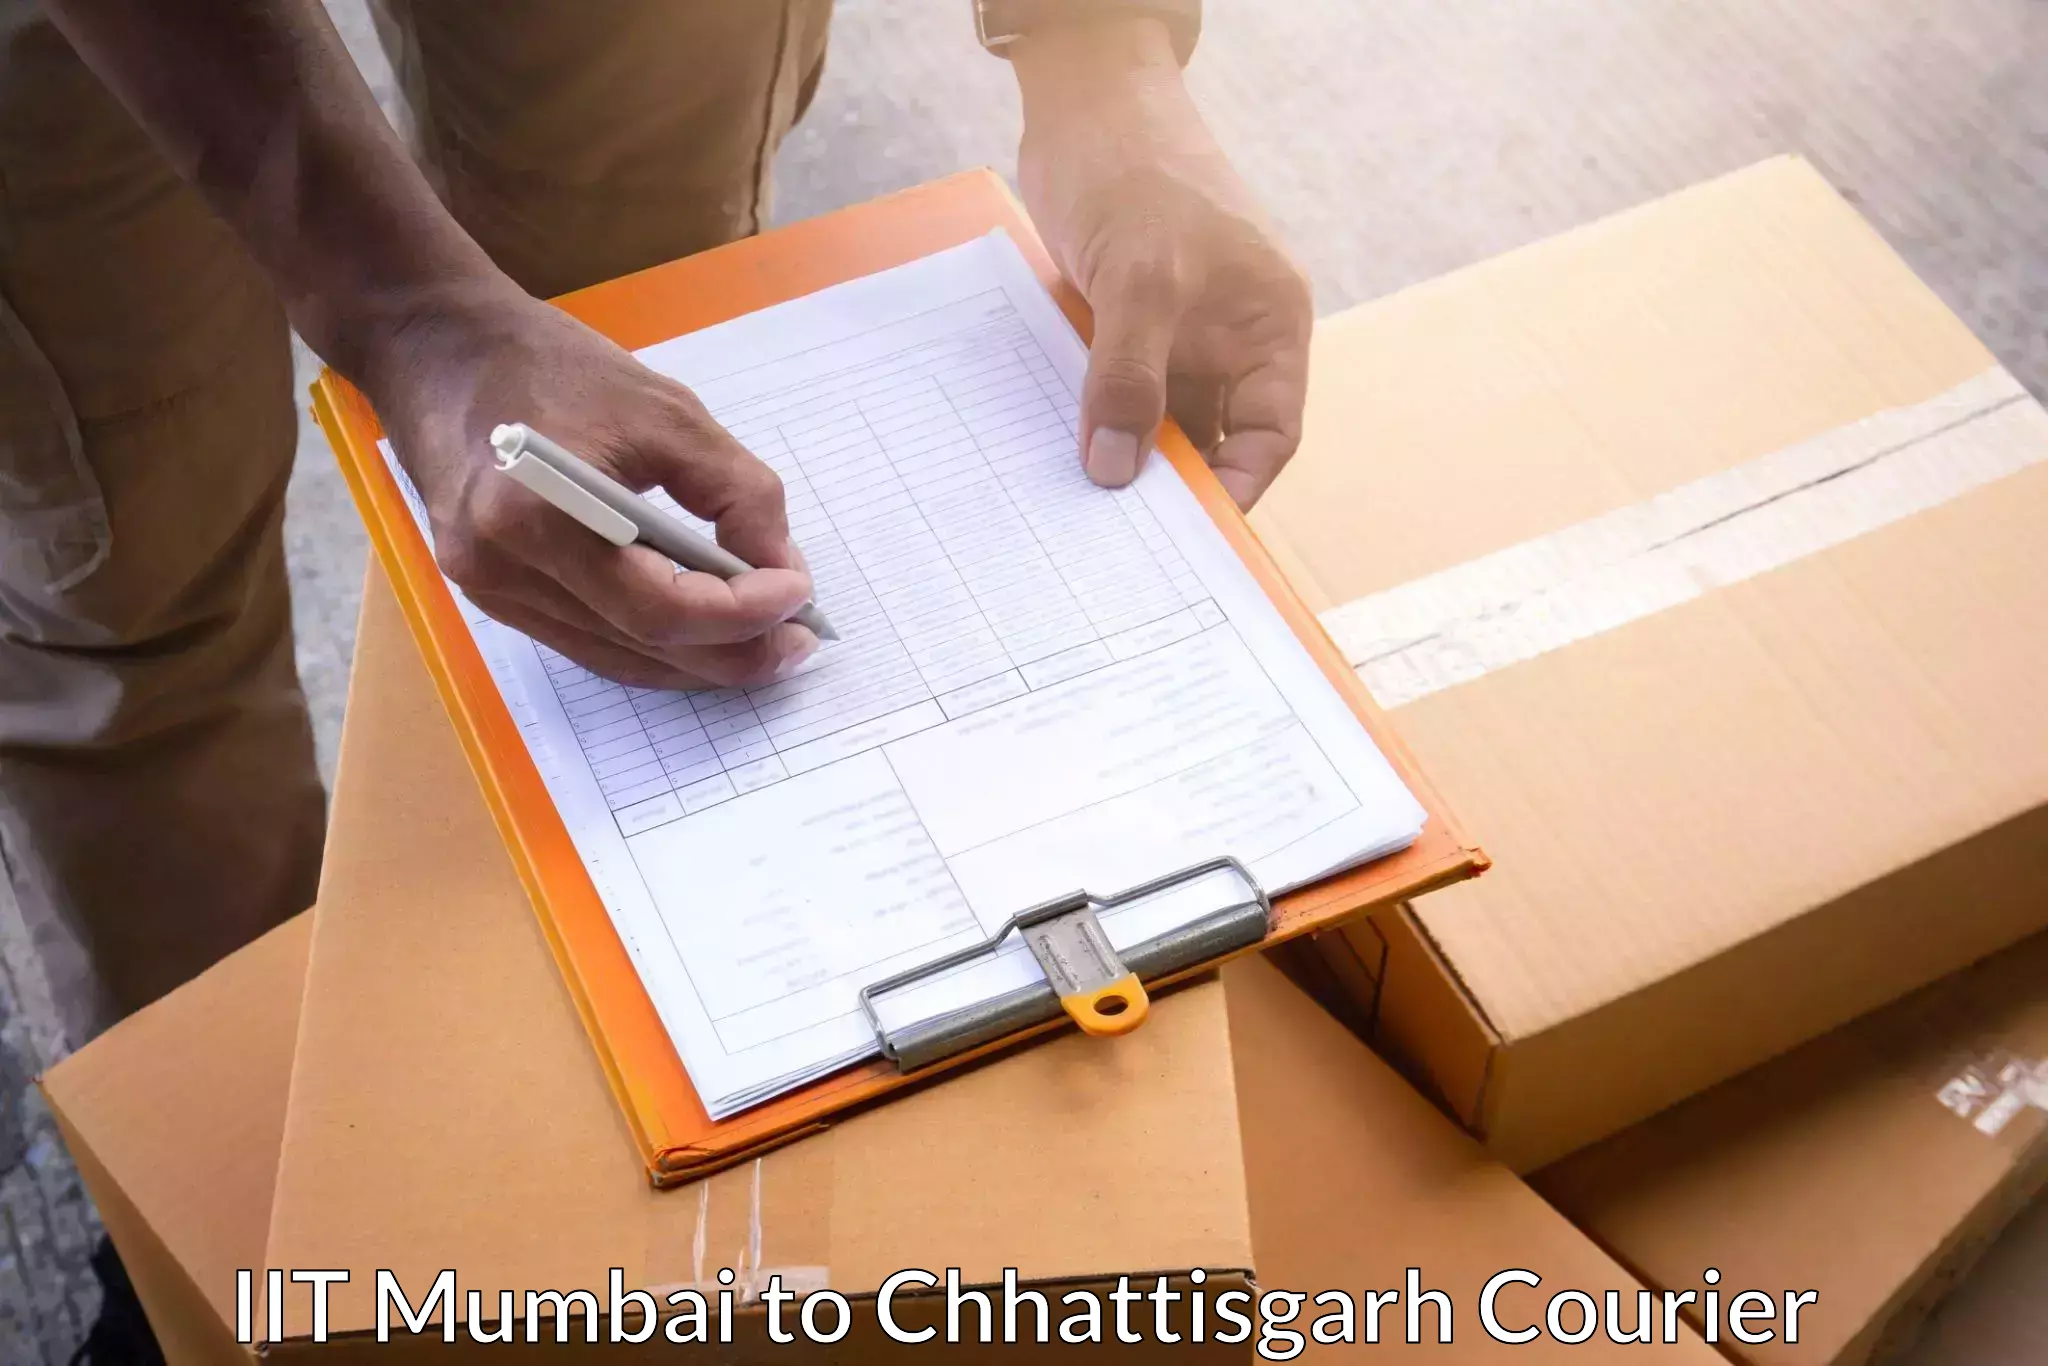 Personalized courier experiences IIT Mumbai to Chhattisgarh